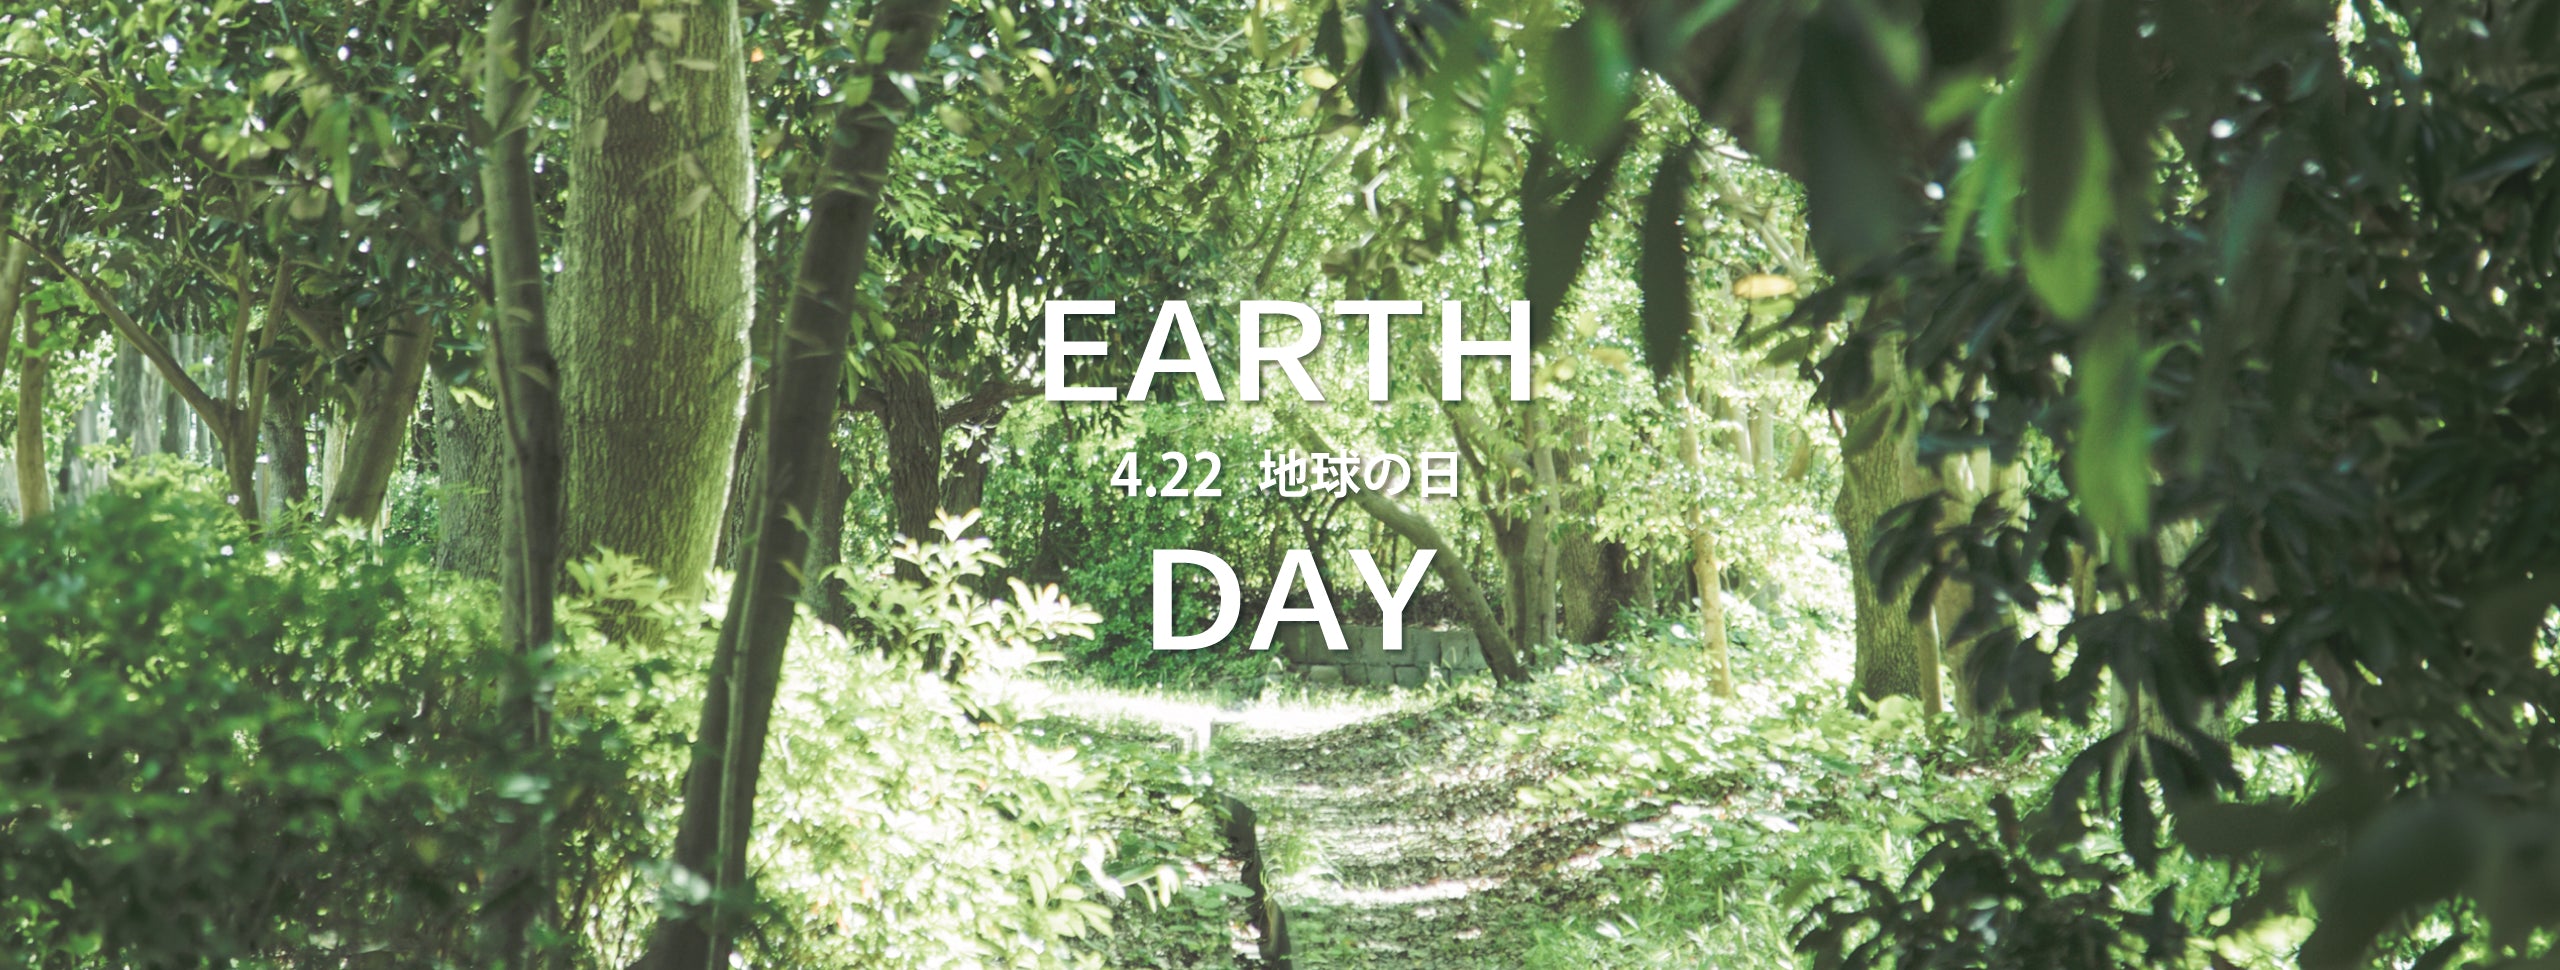 EARTH DAY 4.22 地球の日